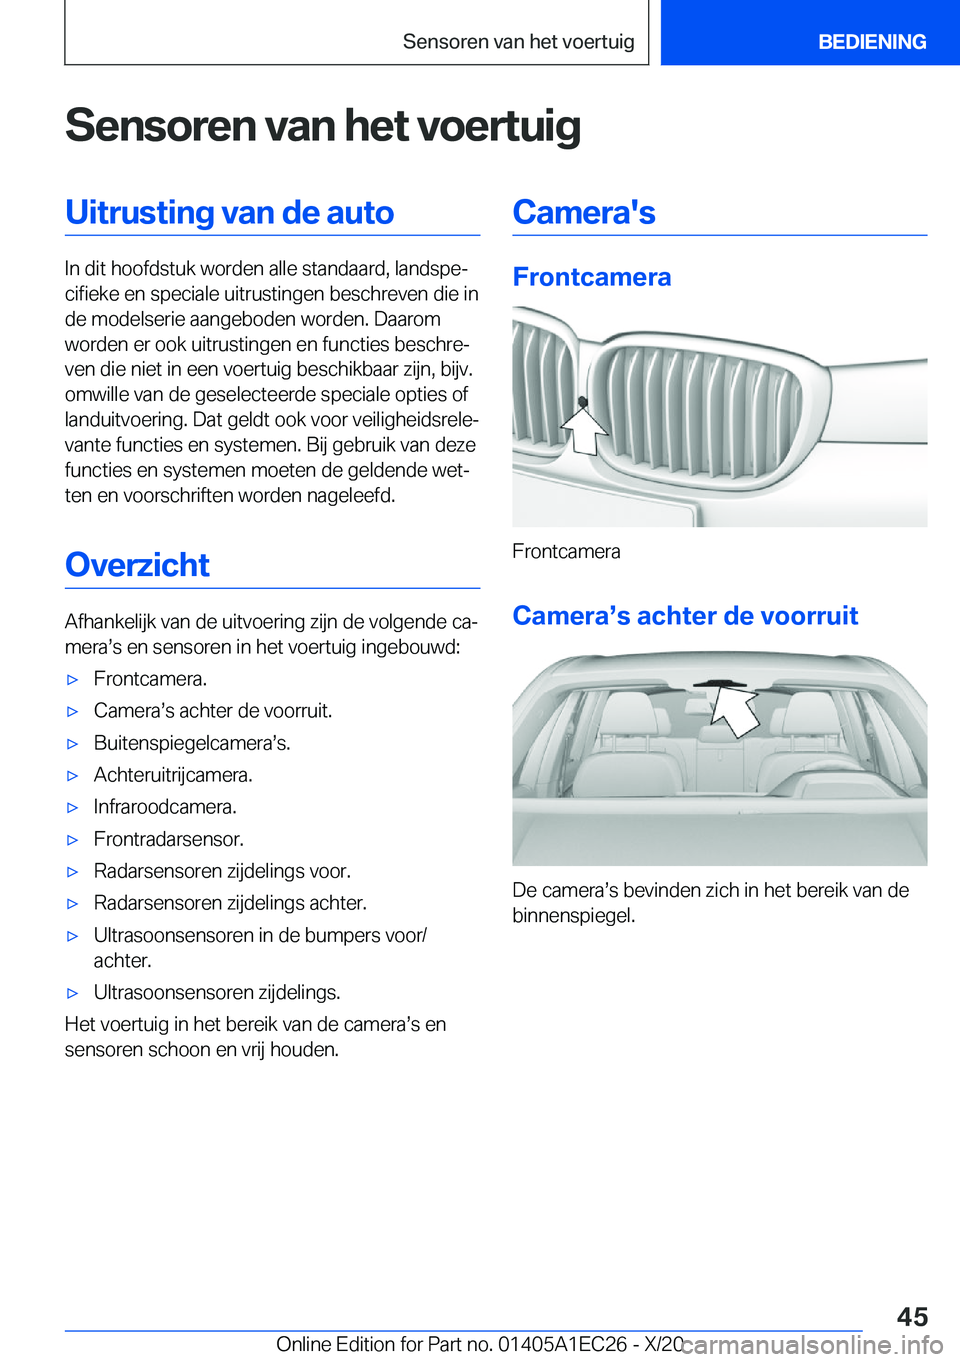 BMW 8 SERIES GRAN COUPE 2021  Instructieboekjes (in Dutch) �S�e�n�s�o�r�e�n��v�a�n��h�e�t��v�o�e�r�t�u�i�g�U�i�t�r�u�s�t�i�n�g��v�a�n��d�e��a�u�t�o
�I�n��d�i�t��h�o�o�f�d�s�t�u�k��w�o�r�d�e�n��a�l�l�e��s�t�a�n�d�a�a�r�d�,��l�a�n�d�s�p�ej�c�i�f�i�